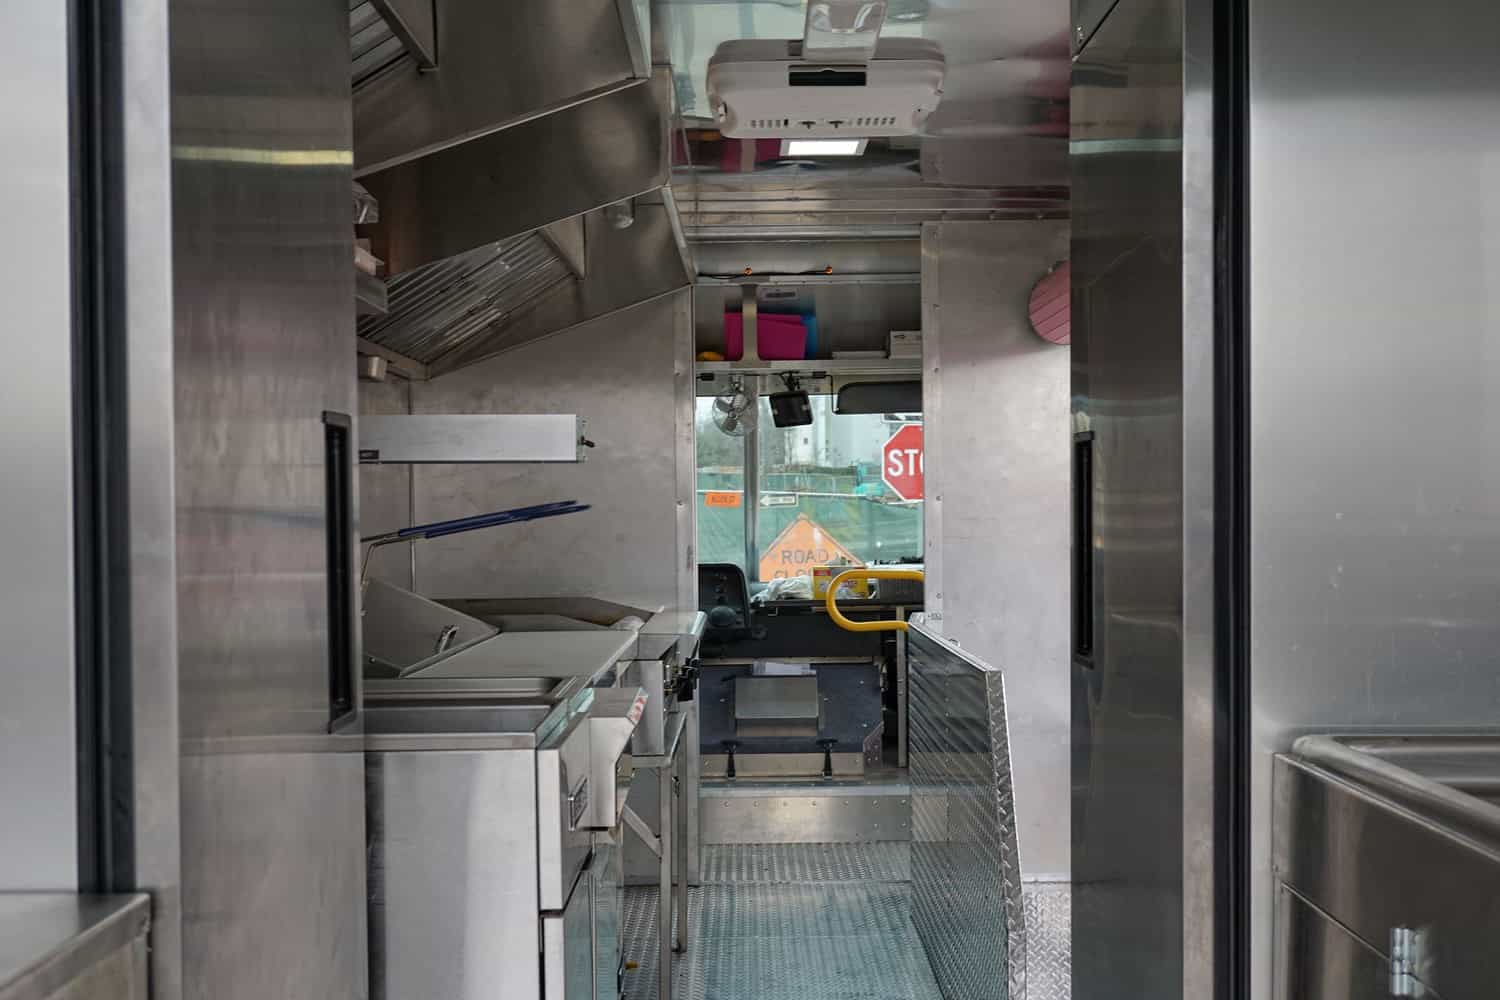 Babies Badass Burgers Food Truck Interior